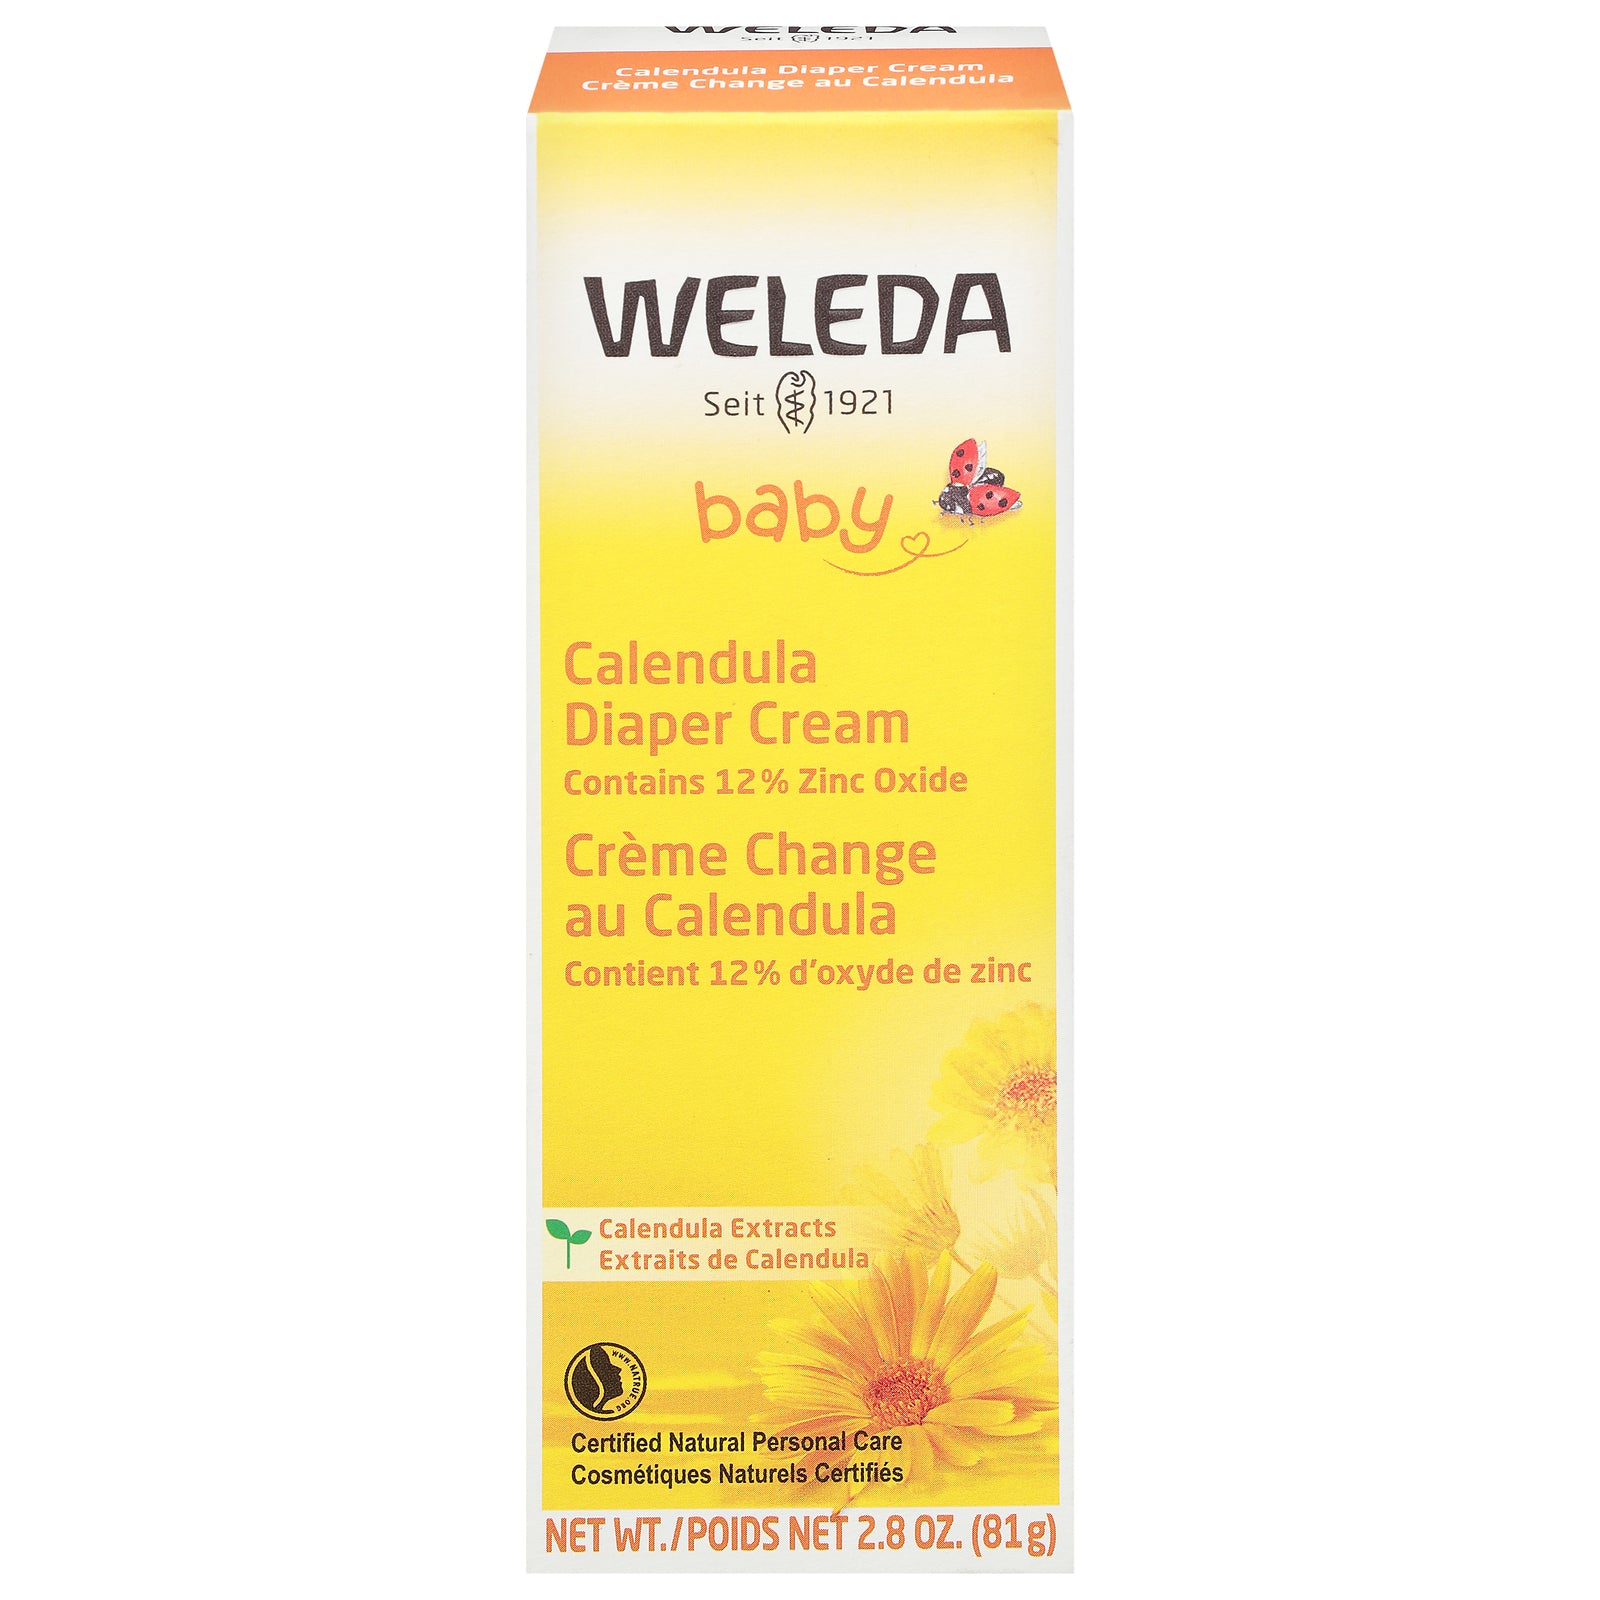 Baby, Calendula Diaper Cream, Calendula Extracts, 2.8 oz (81 g)